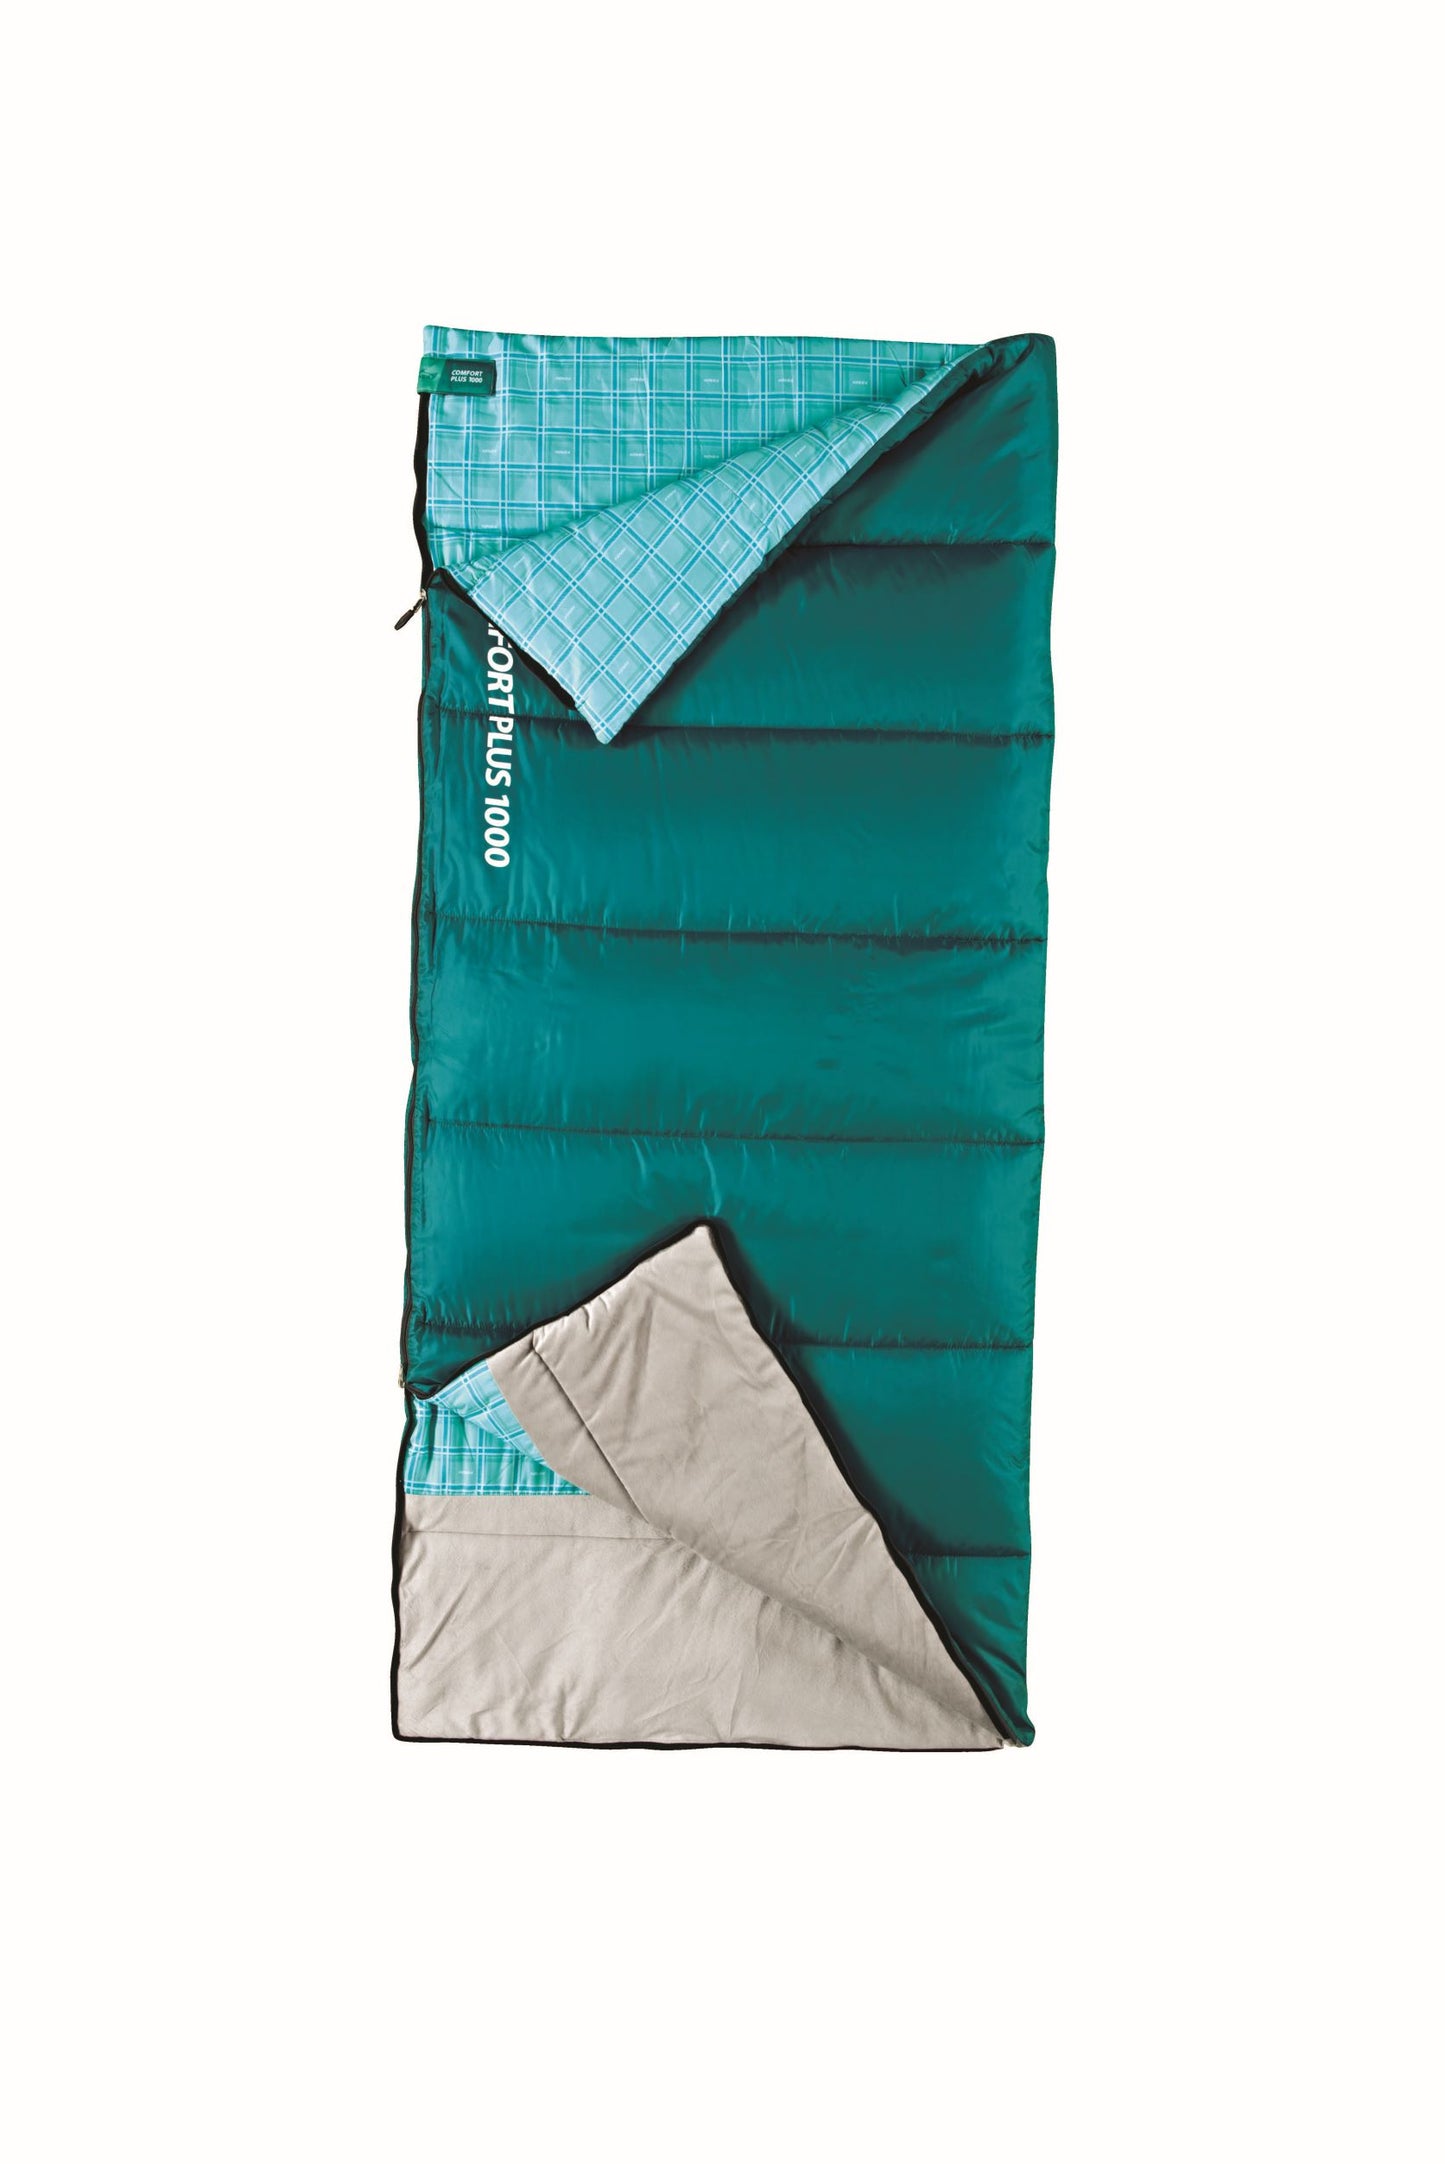 COMFORT PLUS 1000 - Kovea Sleeping Bag (Camping)